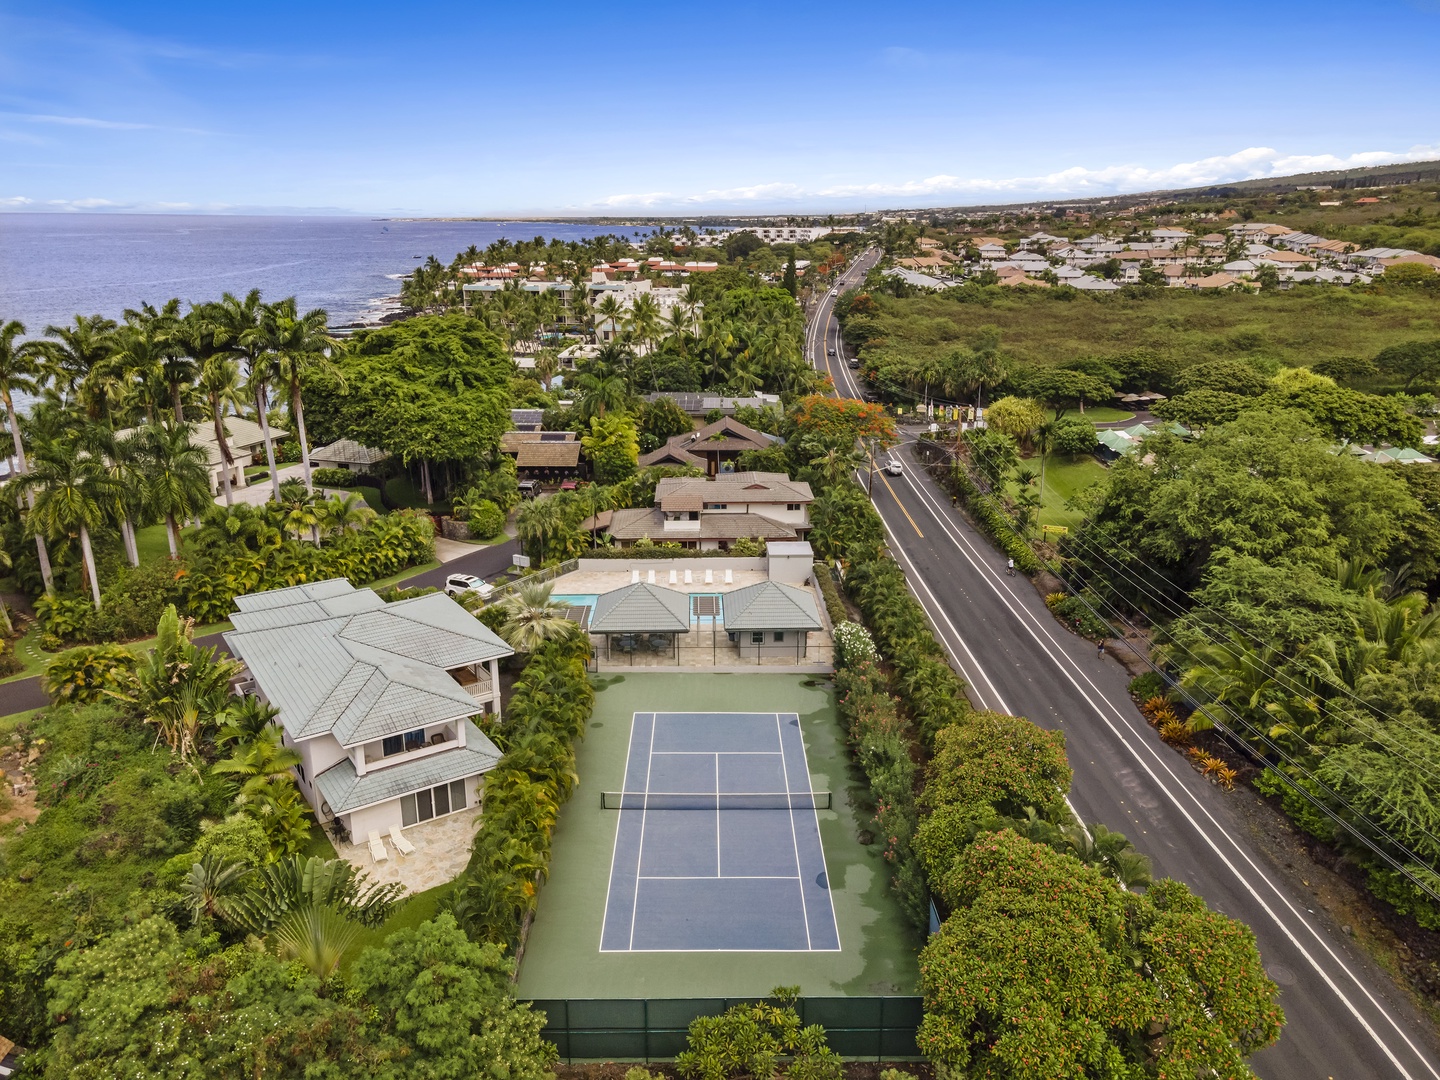 Kailua Kona Vacation Rentals, Ali'i Point #7 - Aerial of the Tennis Court